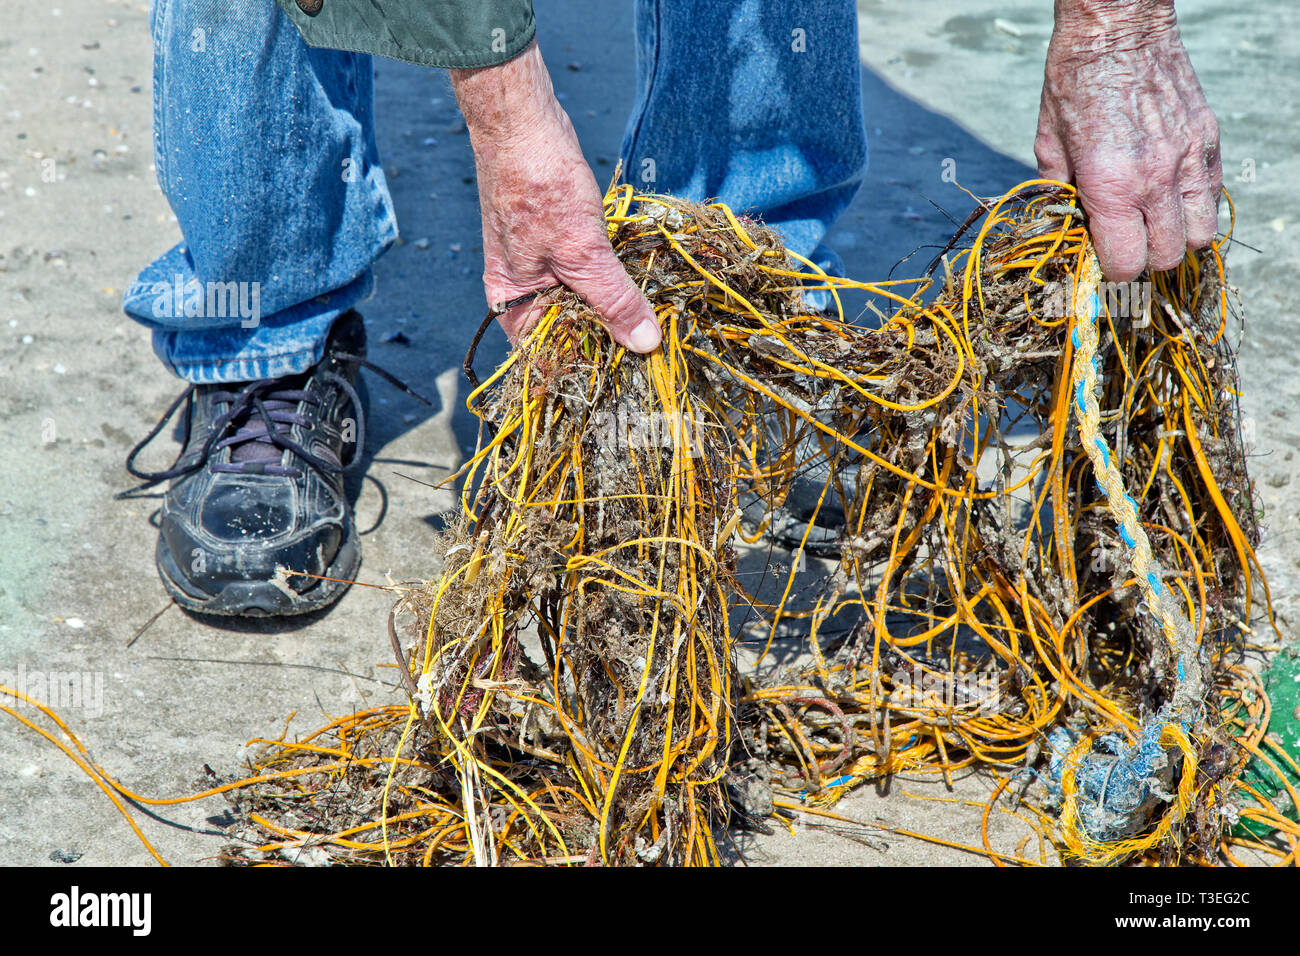 Shoreline, coastal beach, adult male removing trash, poly coated fishing line. Stock Photo